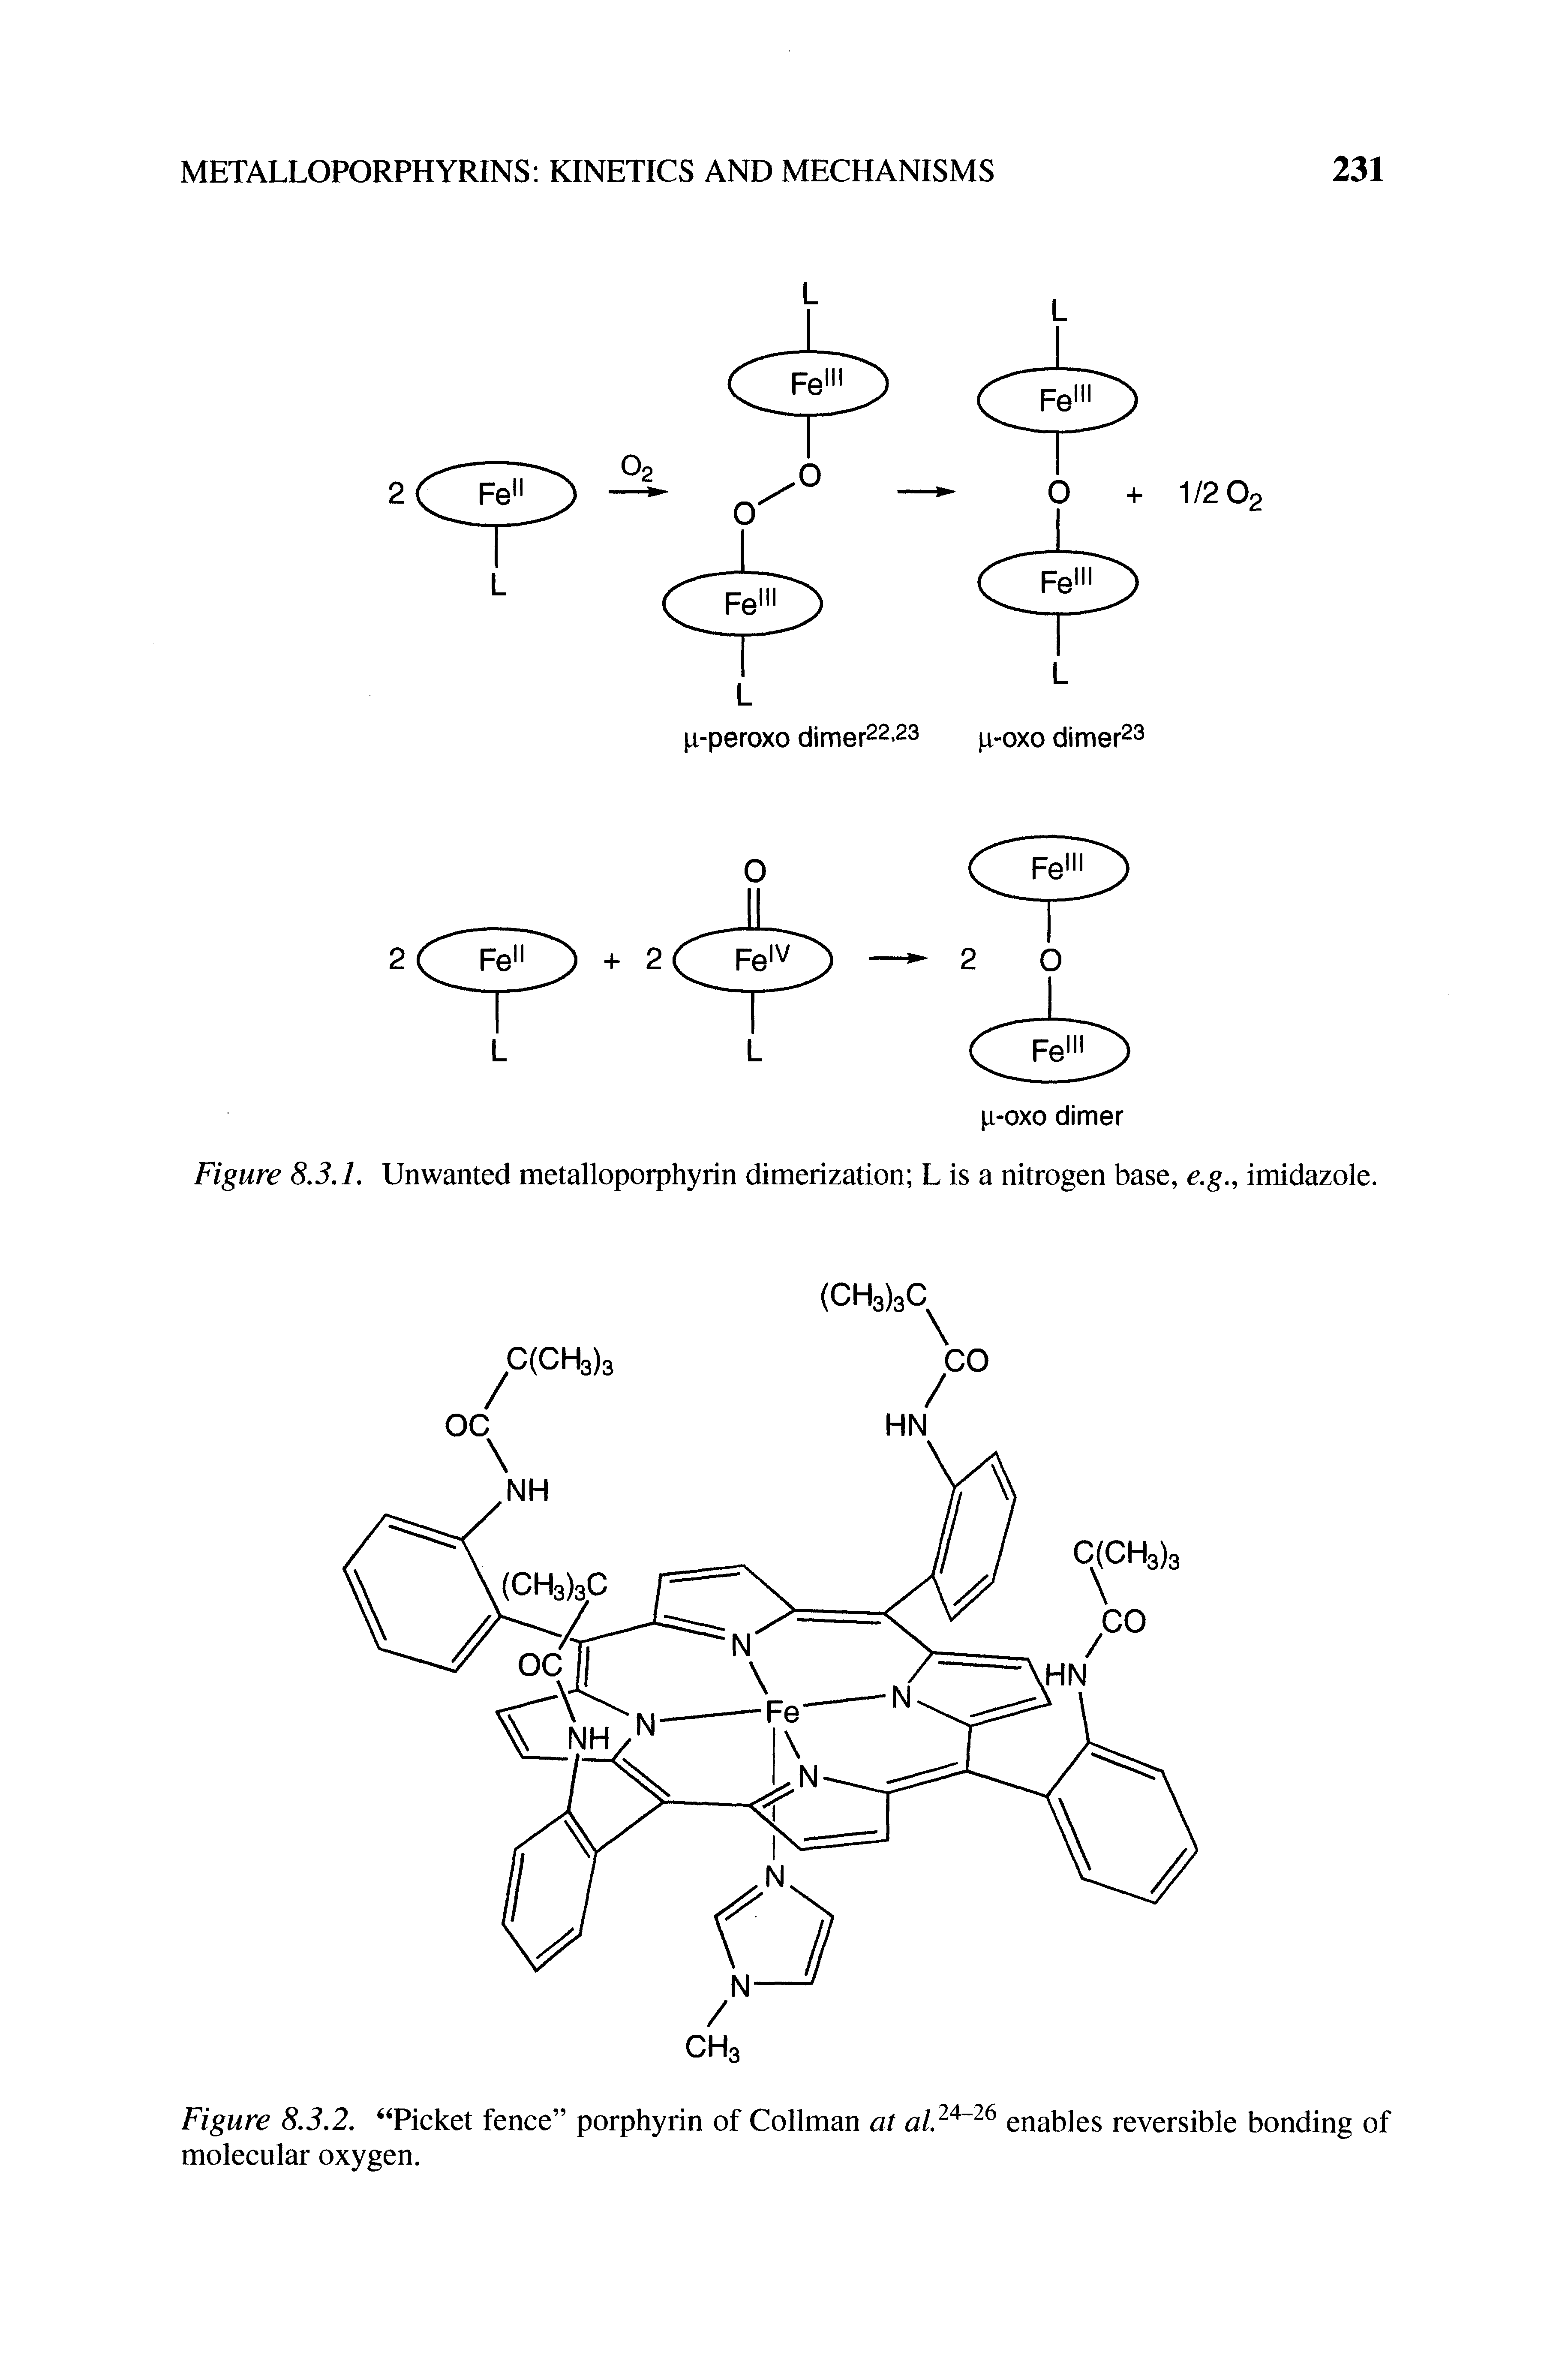 Figure 8.3.1. Unwanted metalloporphyrin dimerization L is a nitrogen base, e.g., imidazole.